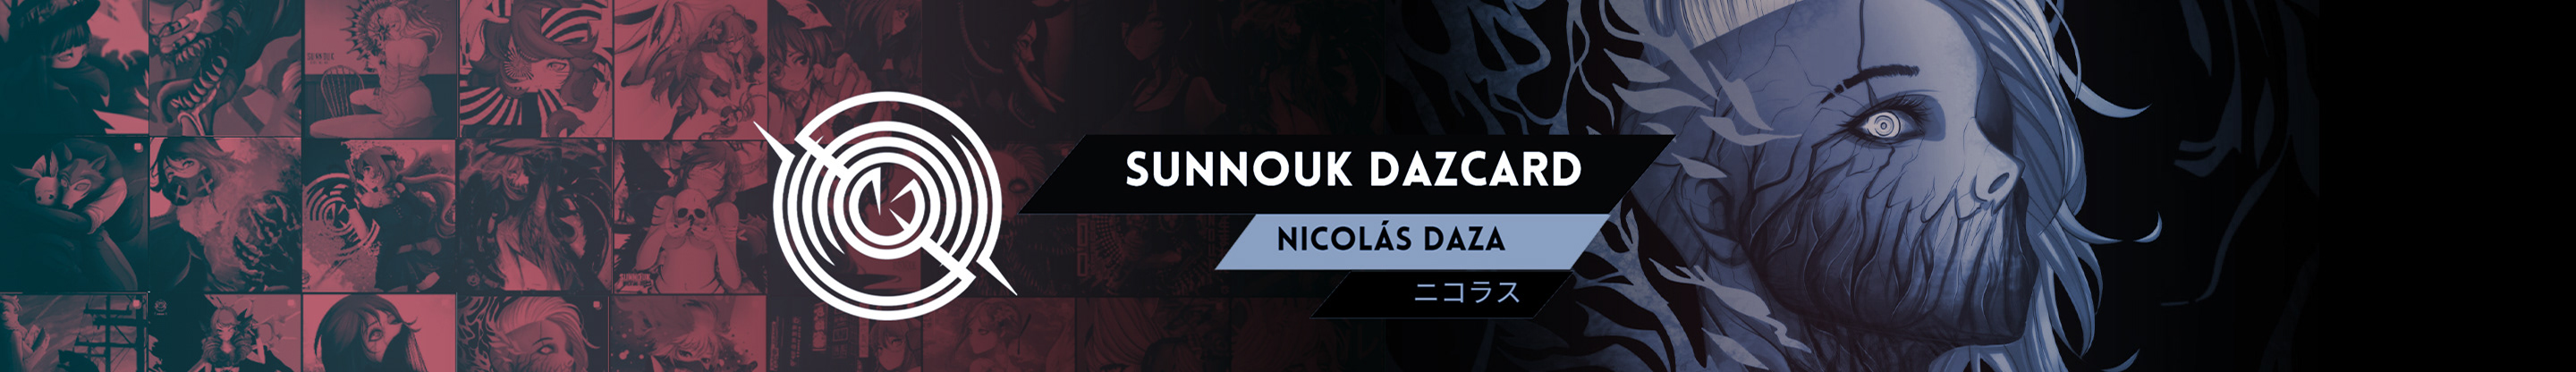 Nicolás Daza's profile banner